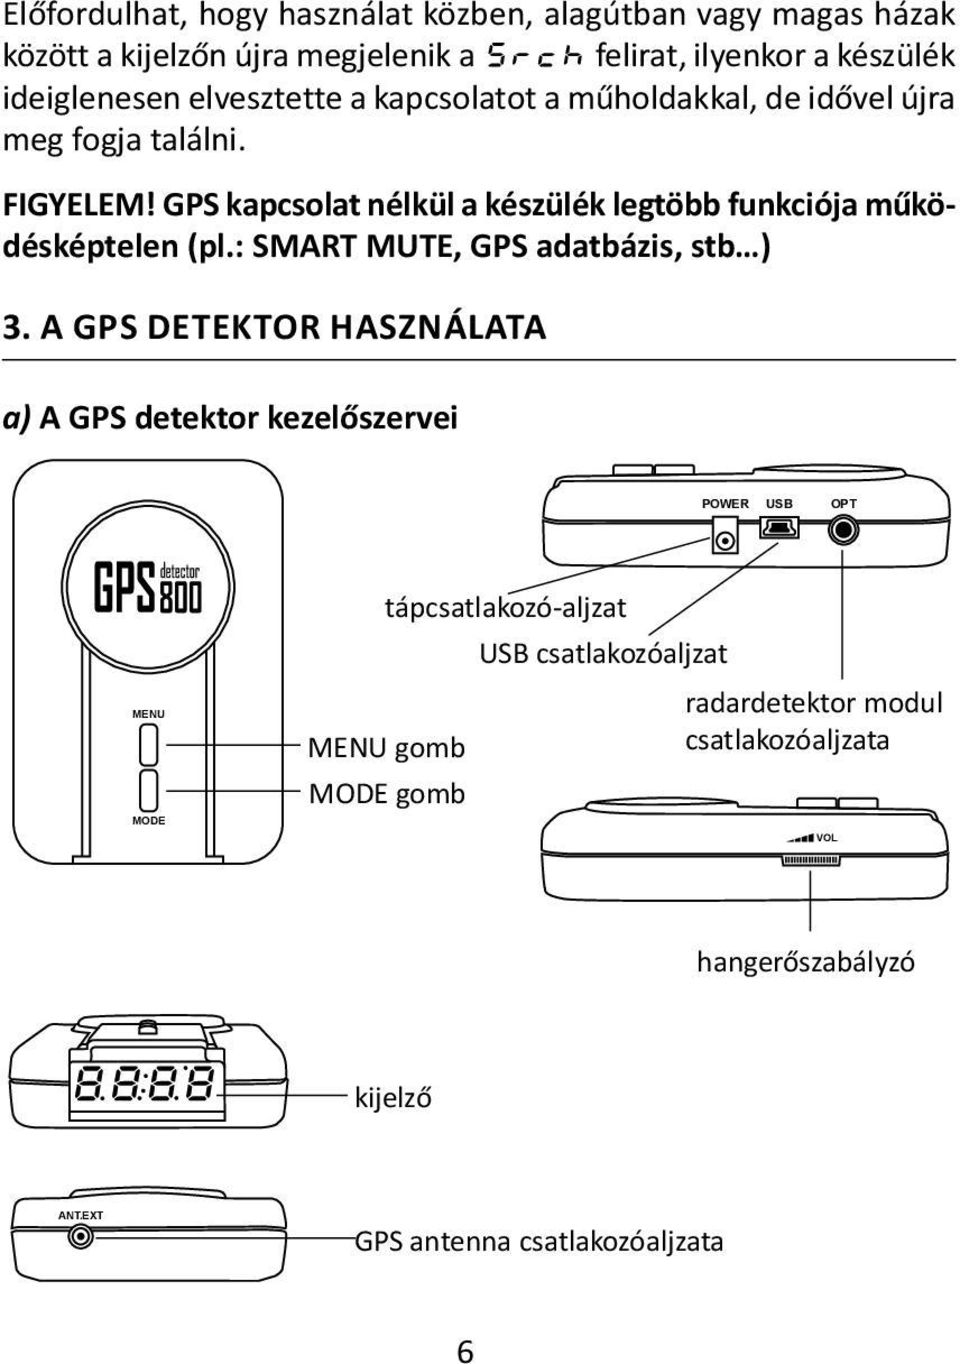 A GPS DETEKTOR HASZNÁLATA POWER USB OPT POWER USB OPT a) A GPS detektor kezelőszervei VOL POWER USB OPT VOL POWER USB OPT MENU MENU MODE MODE tápcsatlakozó-aljzat MENU gomb MODE